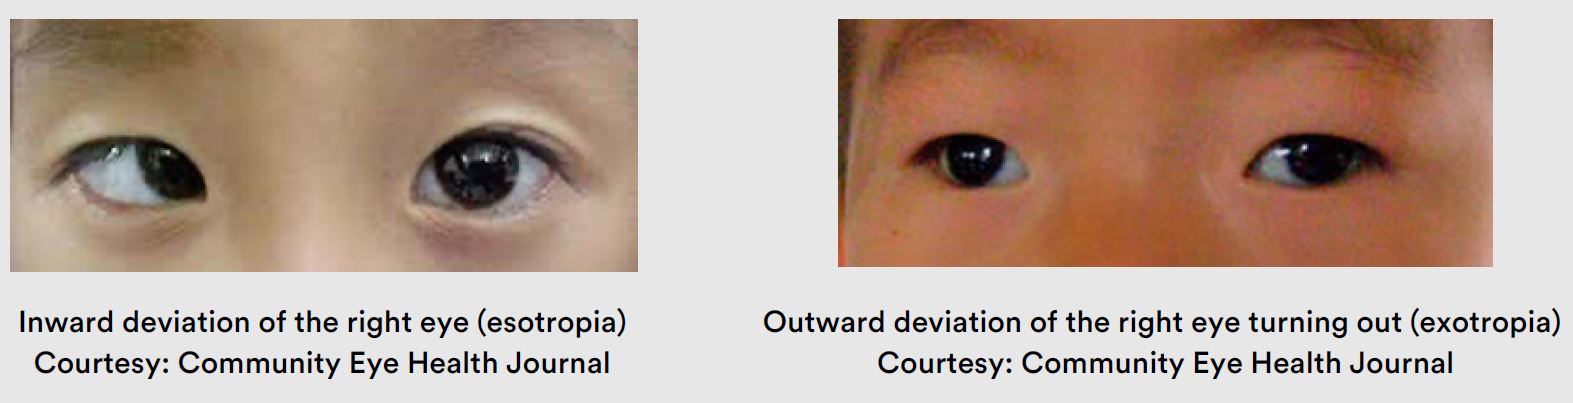 Inward deviation of the right eye (esotropia) and Outward deviation of the right eye turning out (exotropia) Courtesy: Community Eye Health Journal